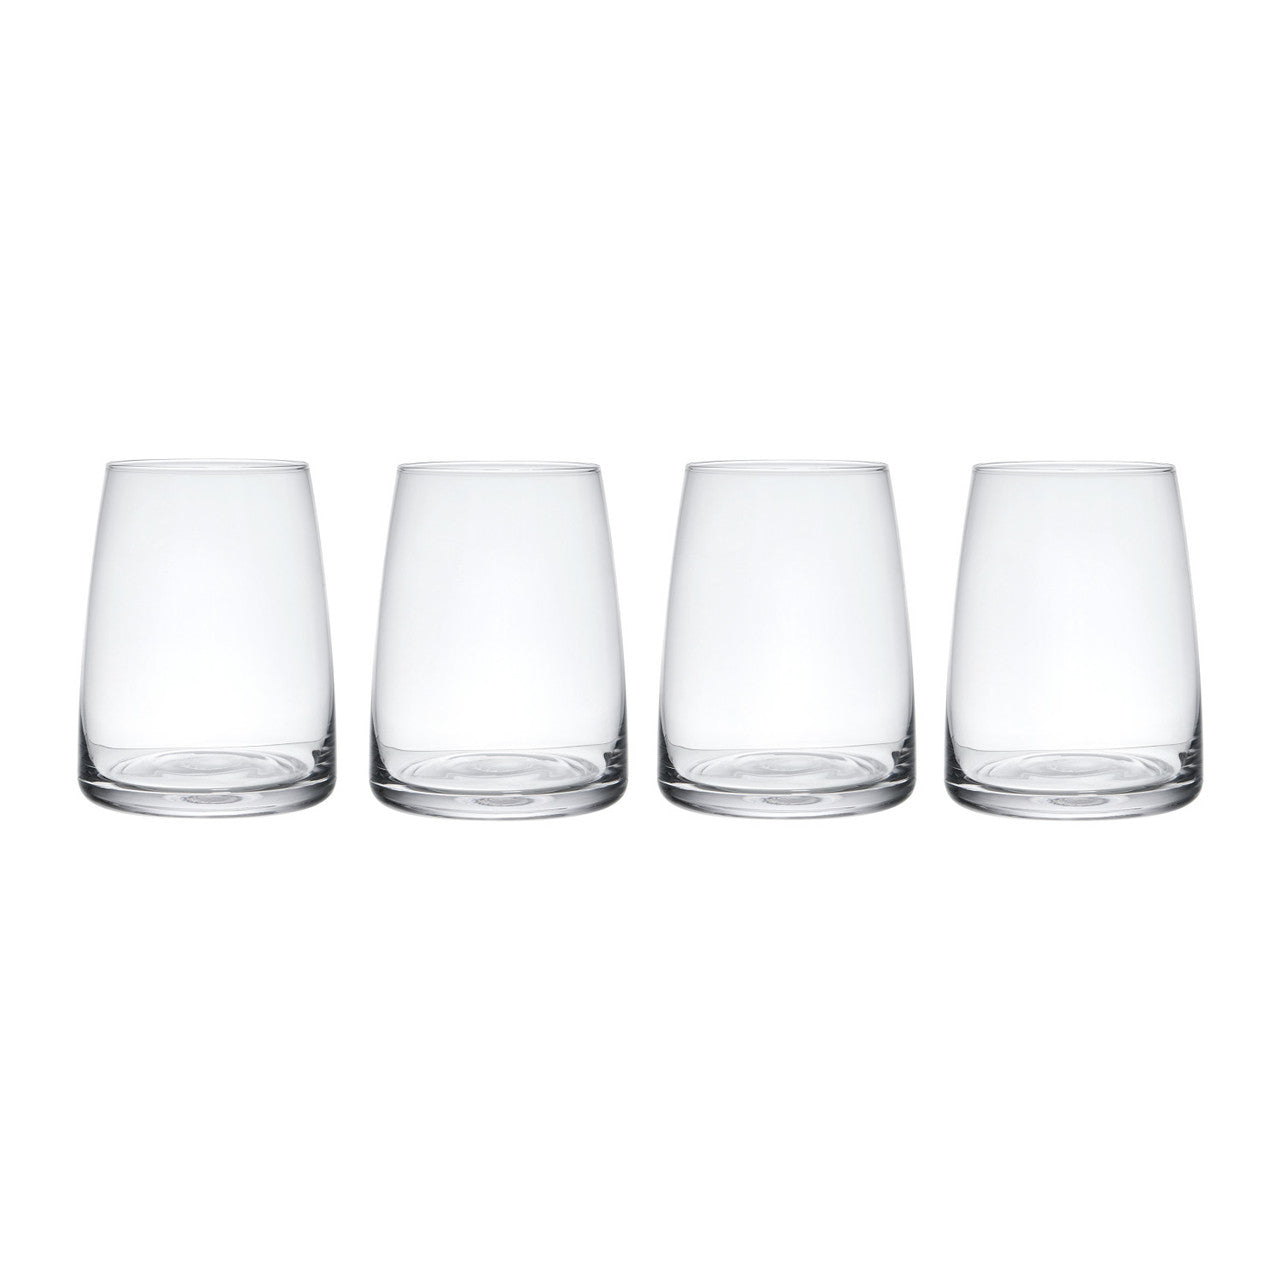 Mikasa Palermo 4 Piece Stemless Wine Glass Set 350ml